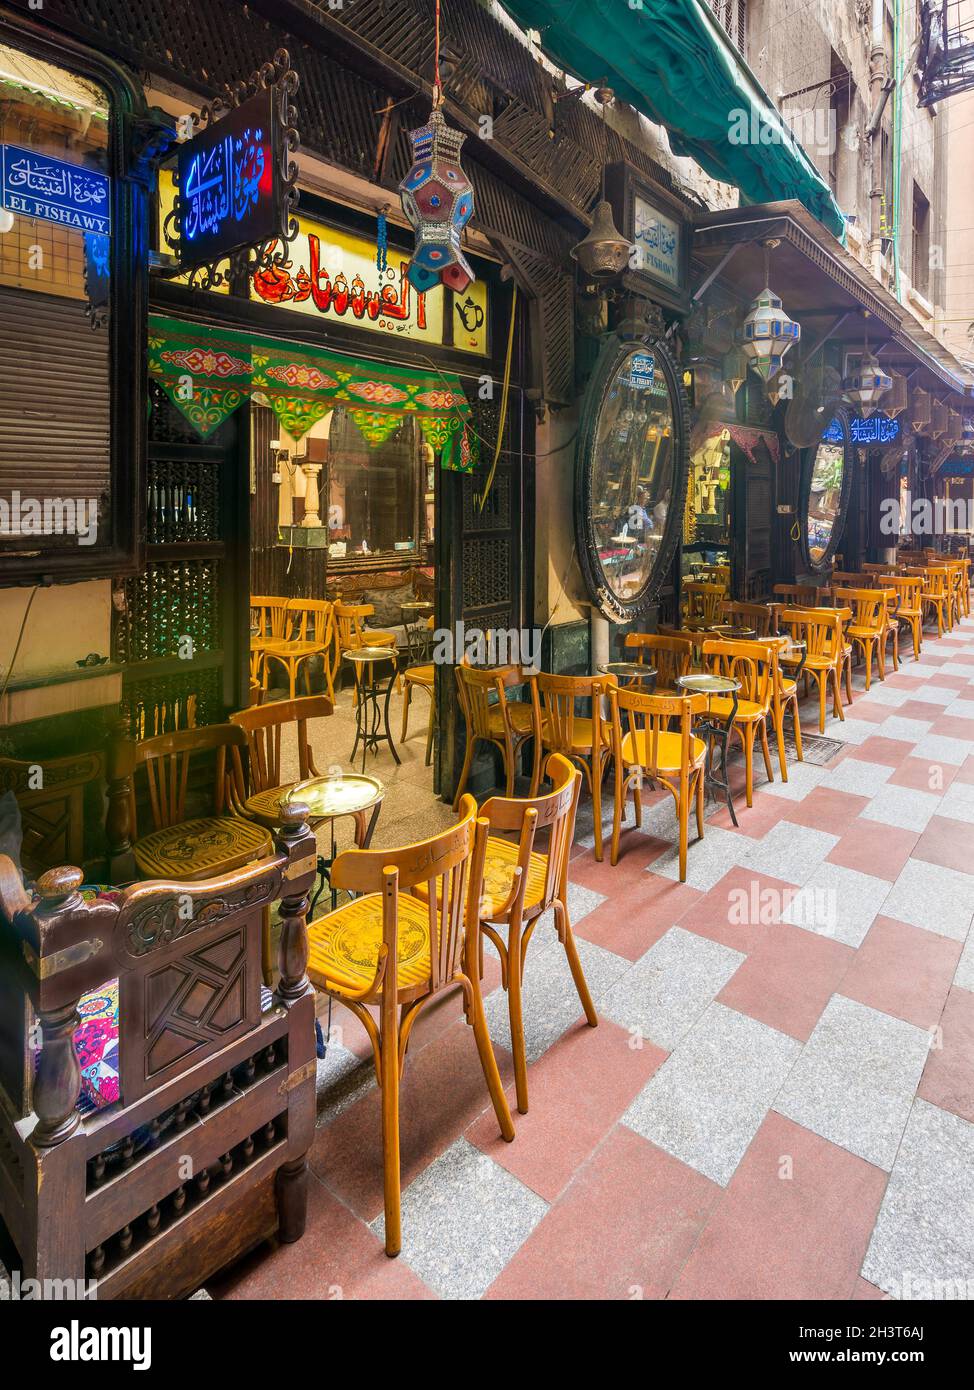 Kairo, Ägypten - September 25 2021: Altes berühmtes Kaffeehaus, El Fishawi, gelegen im historischen Mamluk Ära Khan al-Khalili berühmten Basar und Souk Stockfoto